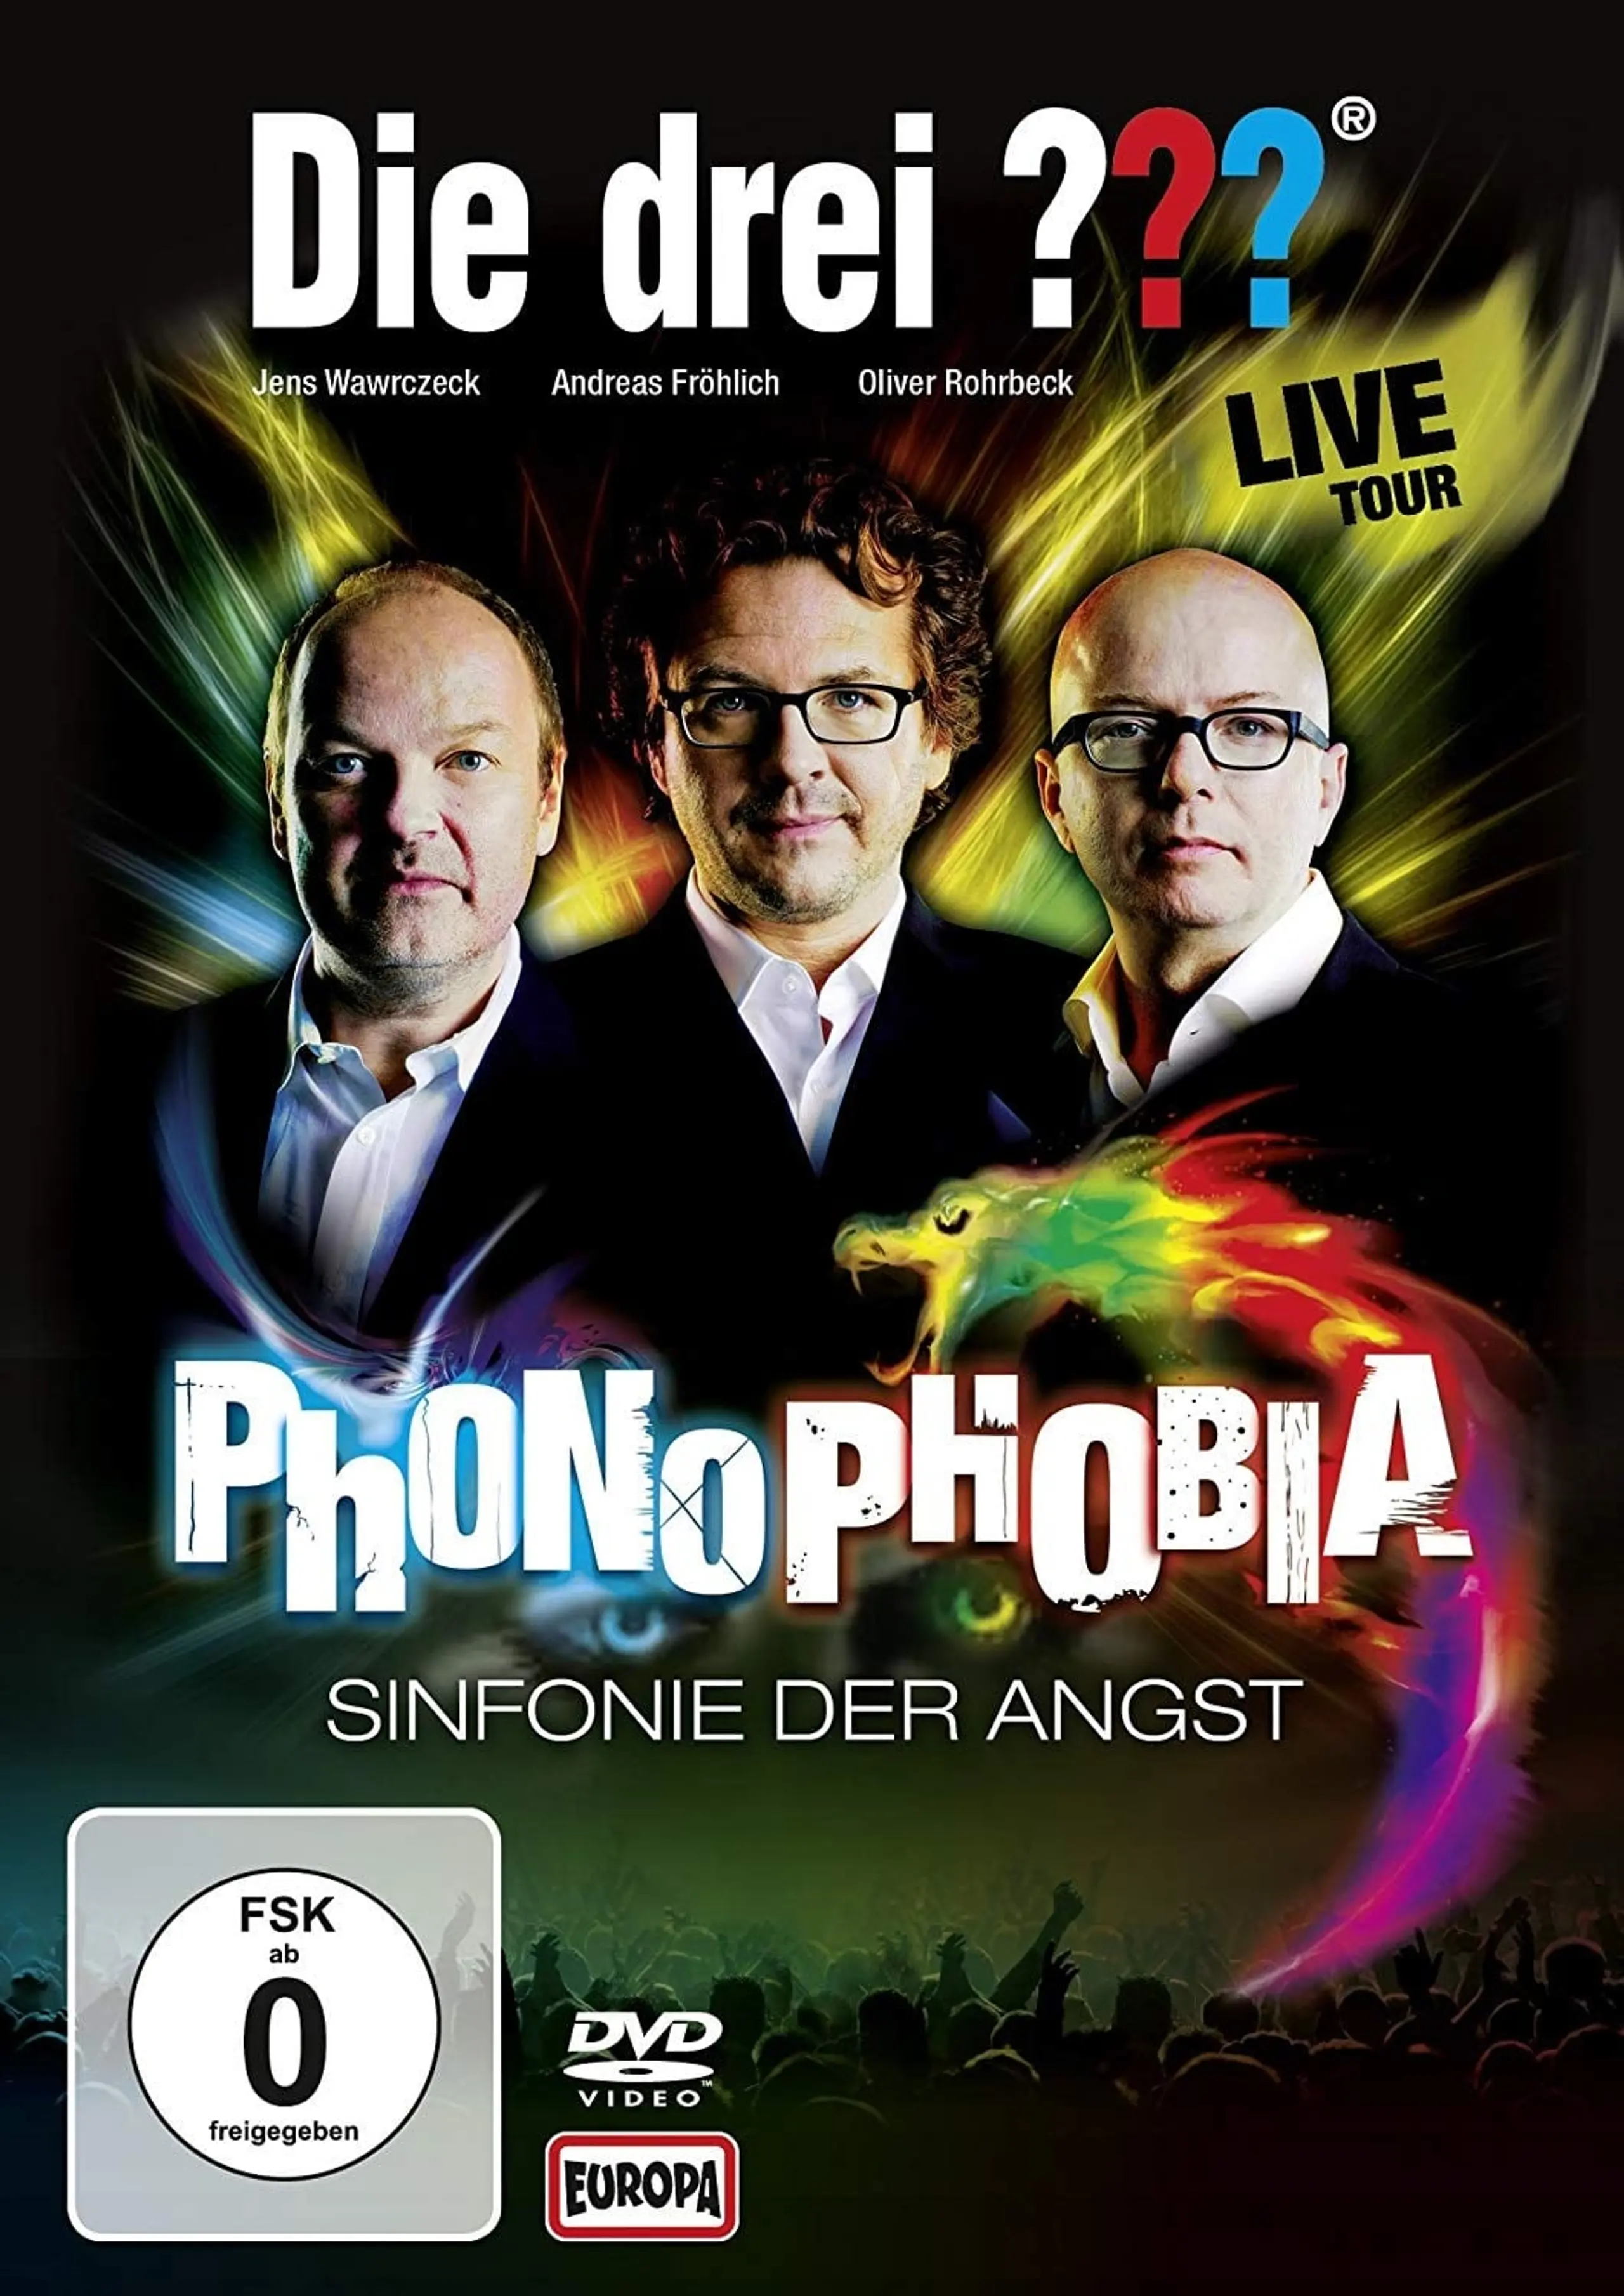 Die drei ??? LIVE - Phonophobia - Sinfonie der Angst